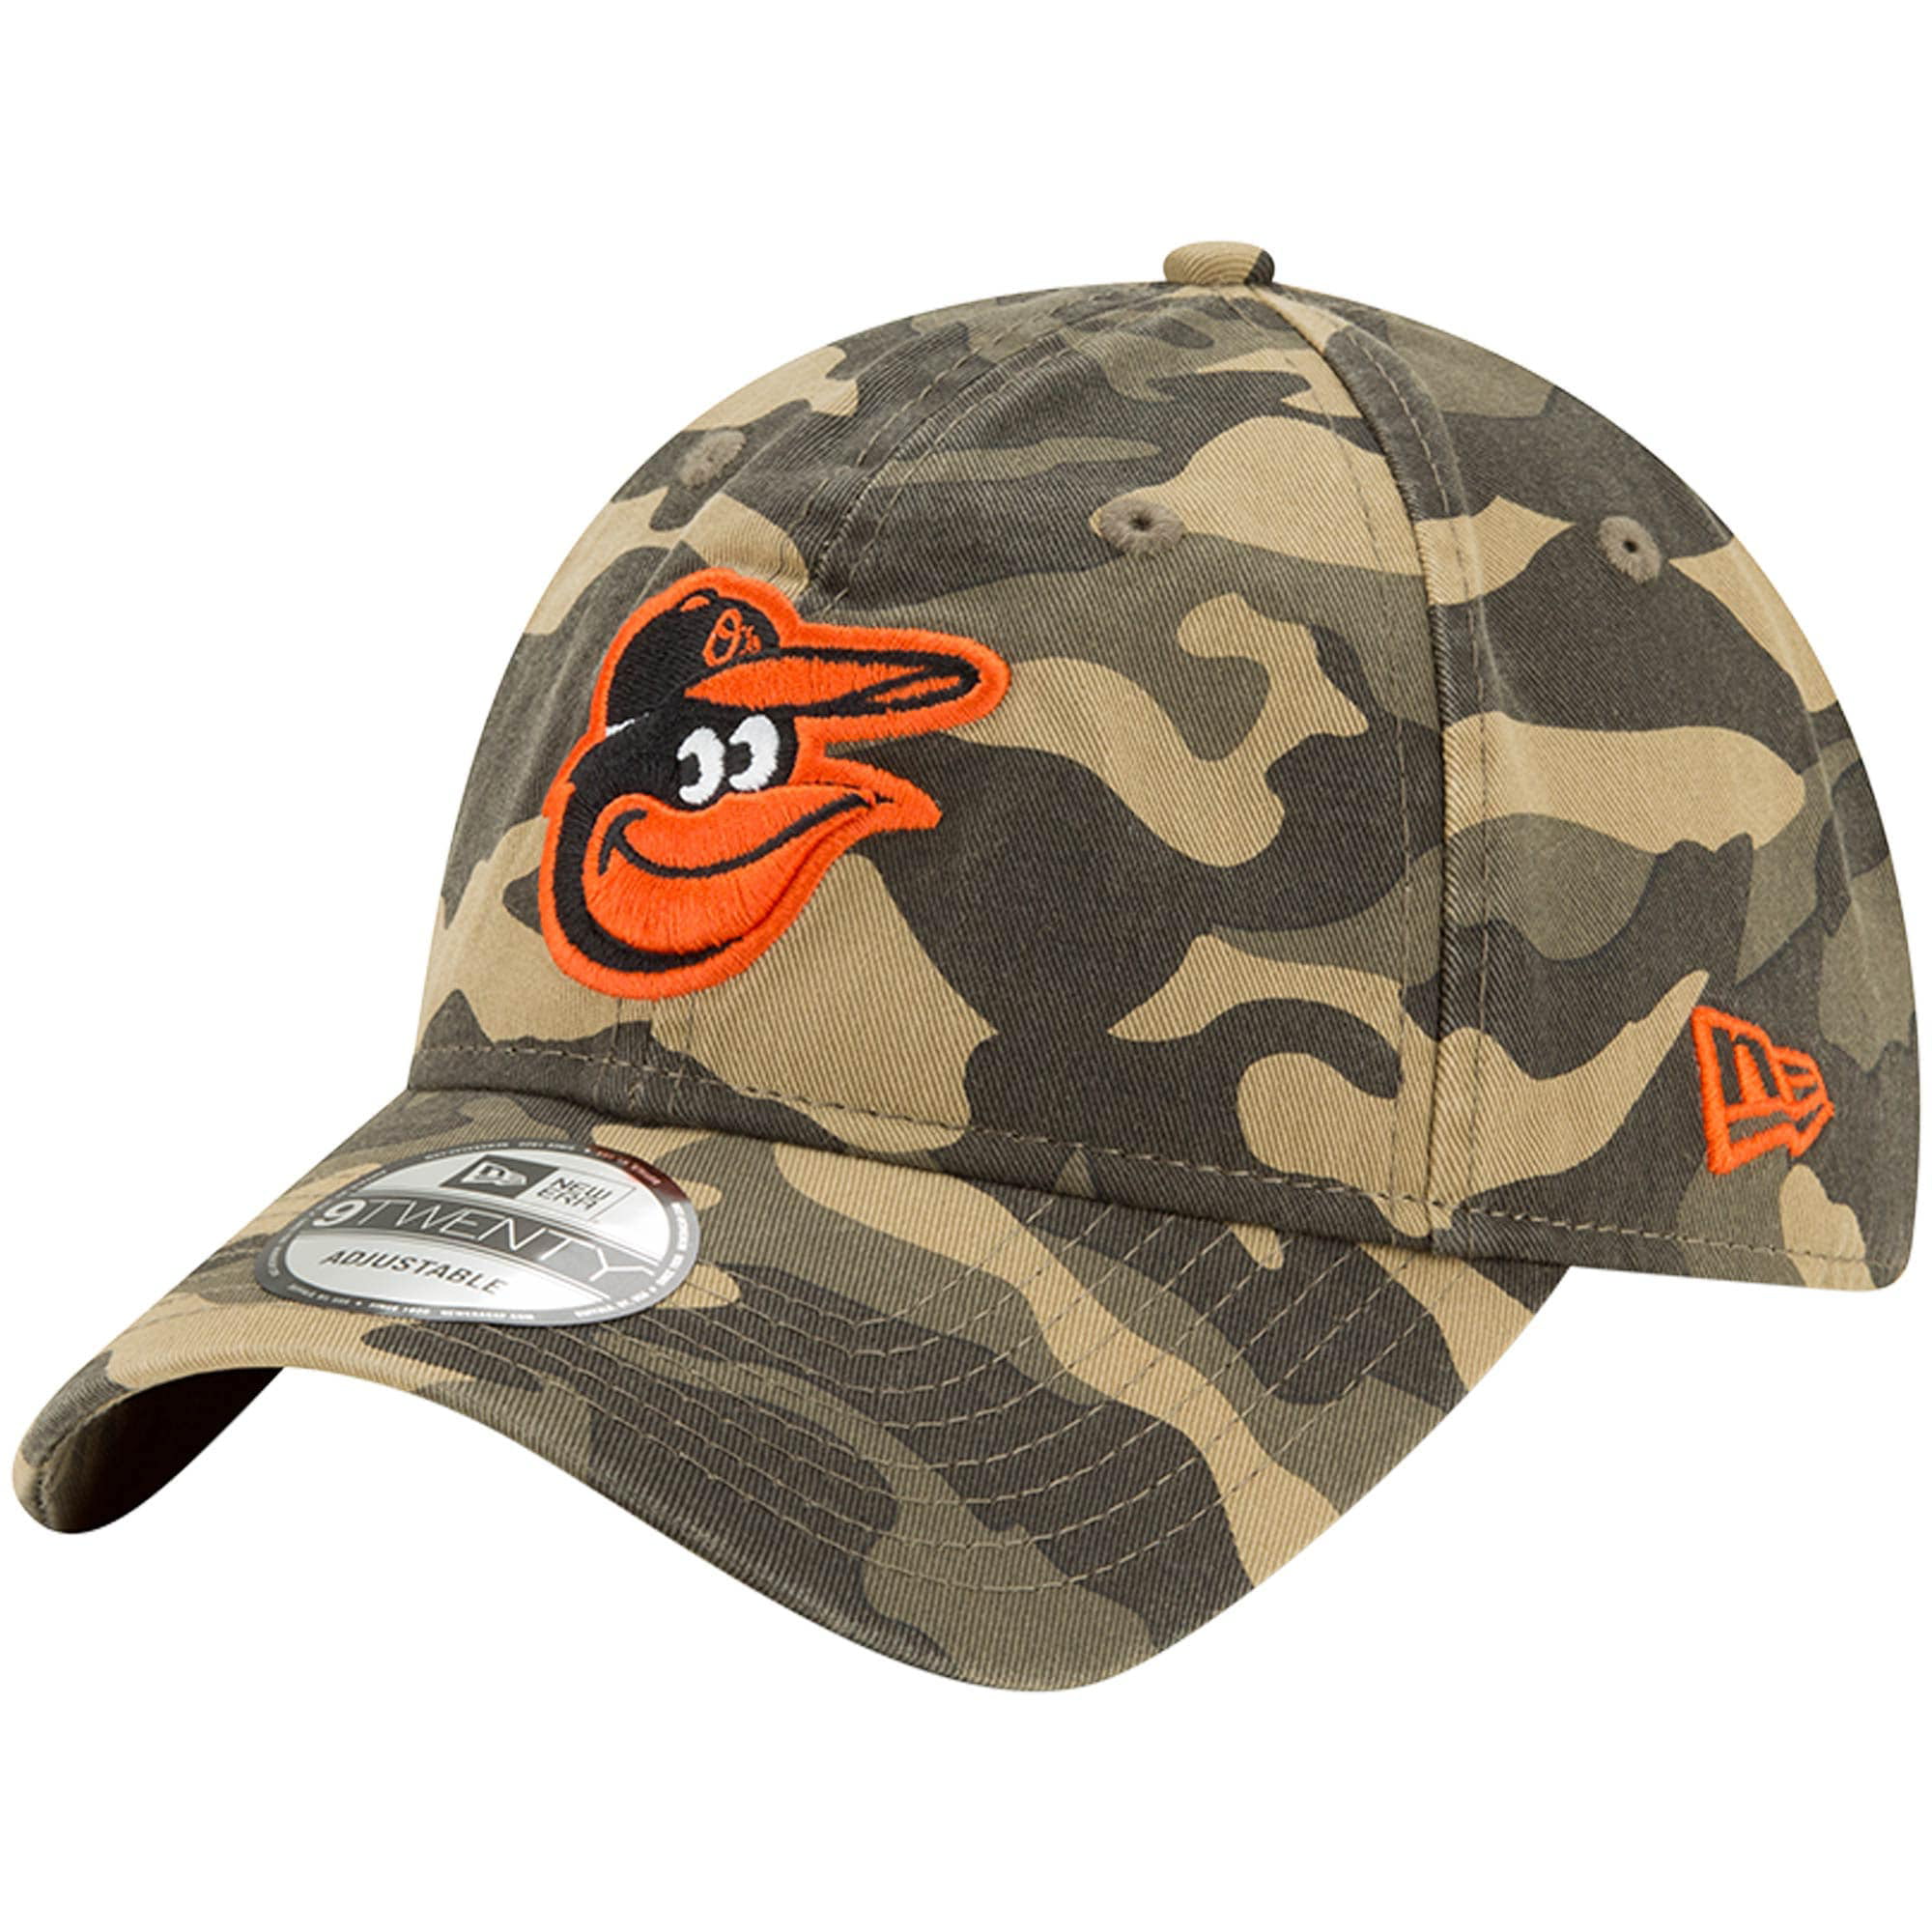 Baltimore Orioles Camo Baseball Helmet Decals 